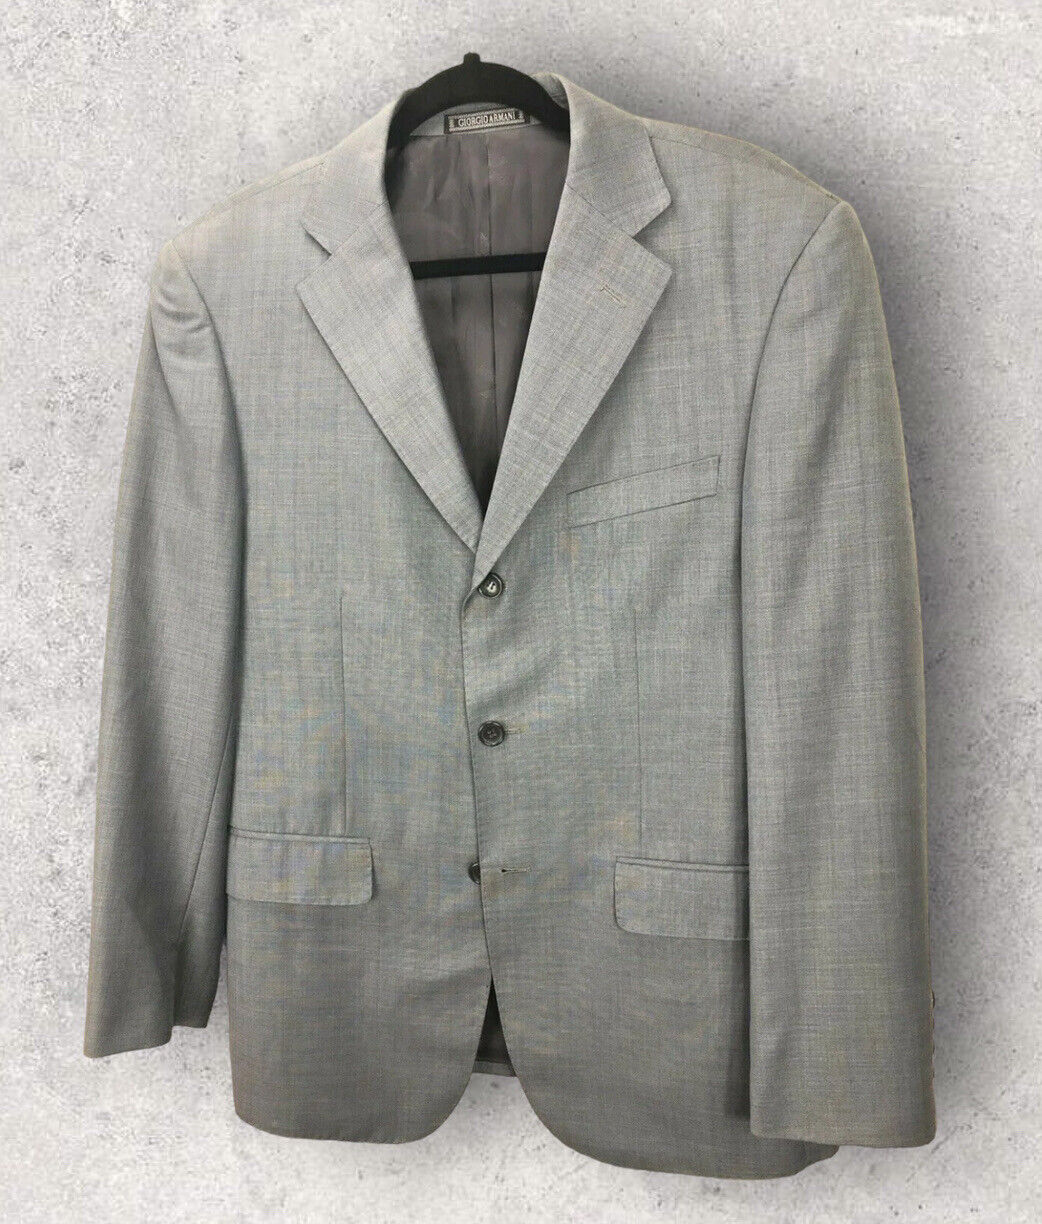 GIORGIO ARMANI Black Label Sport Coat Jacket 3-Button Wool (44